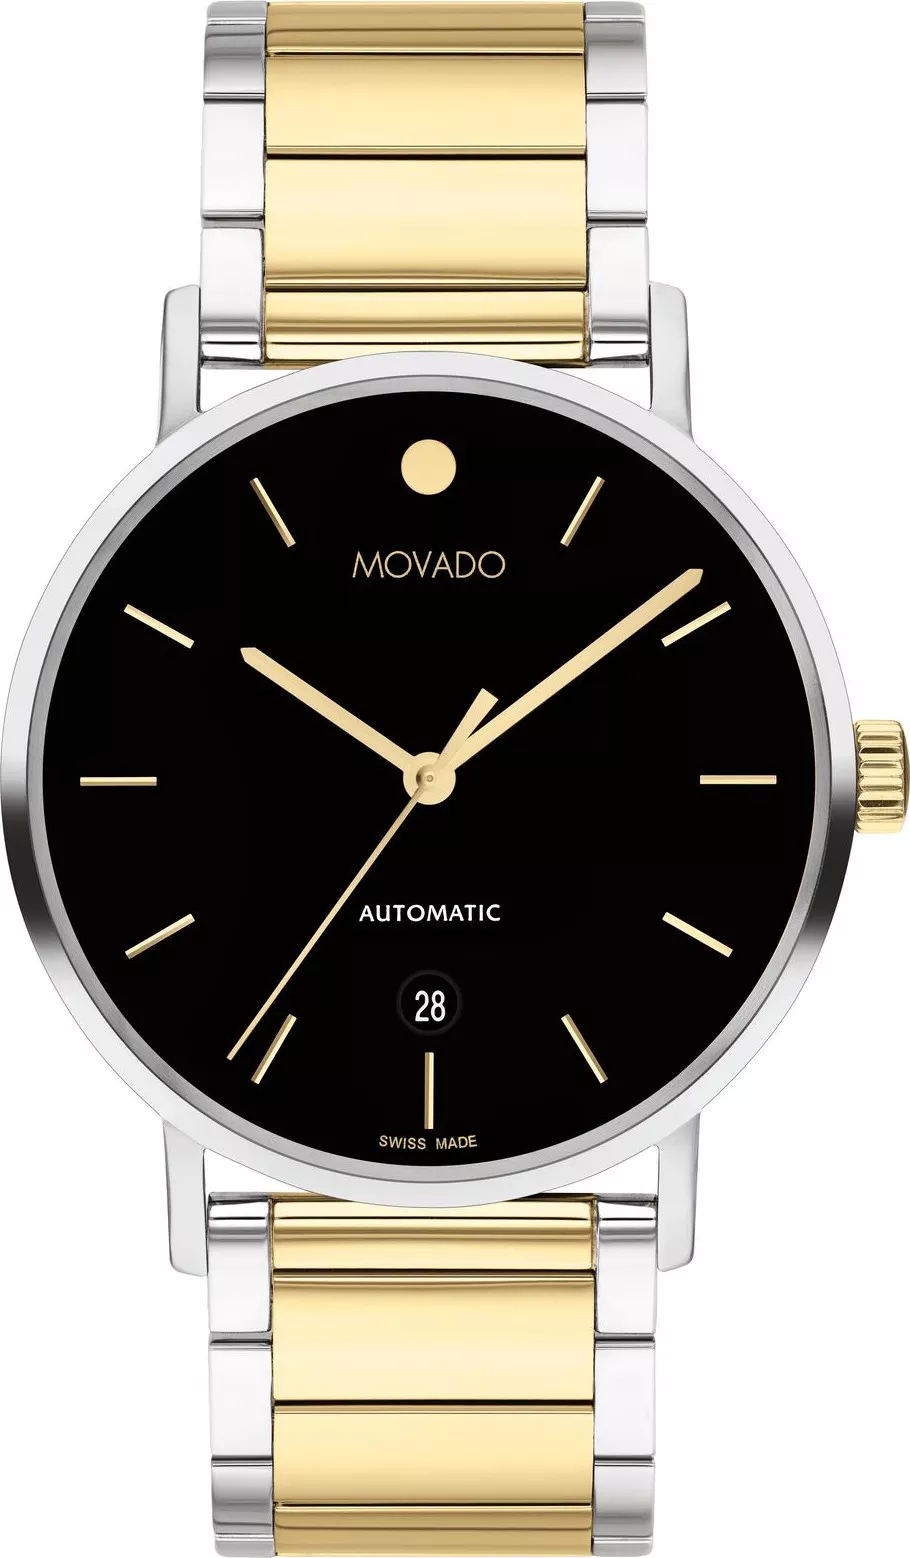 MSP: 102246 Movado Signature Automatic Watch 40MM 41,370,000